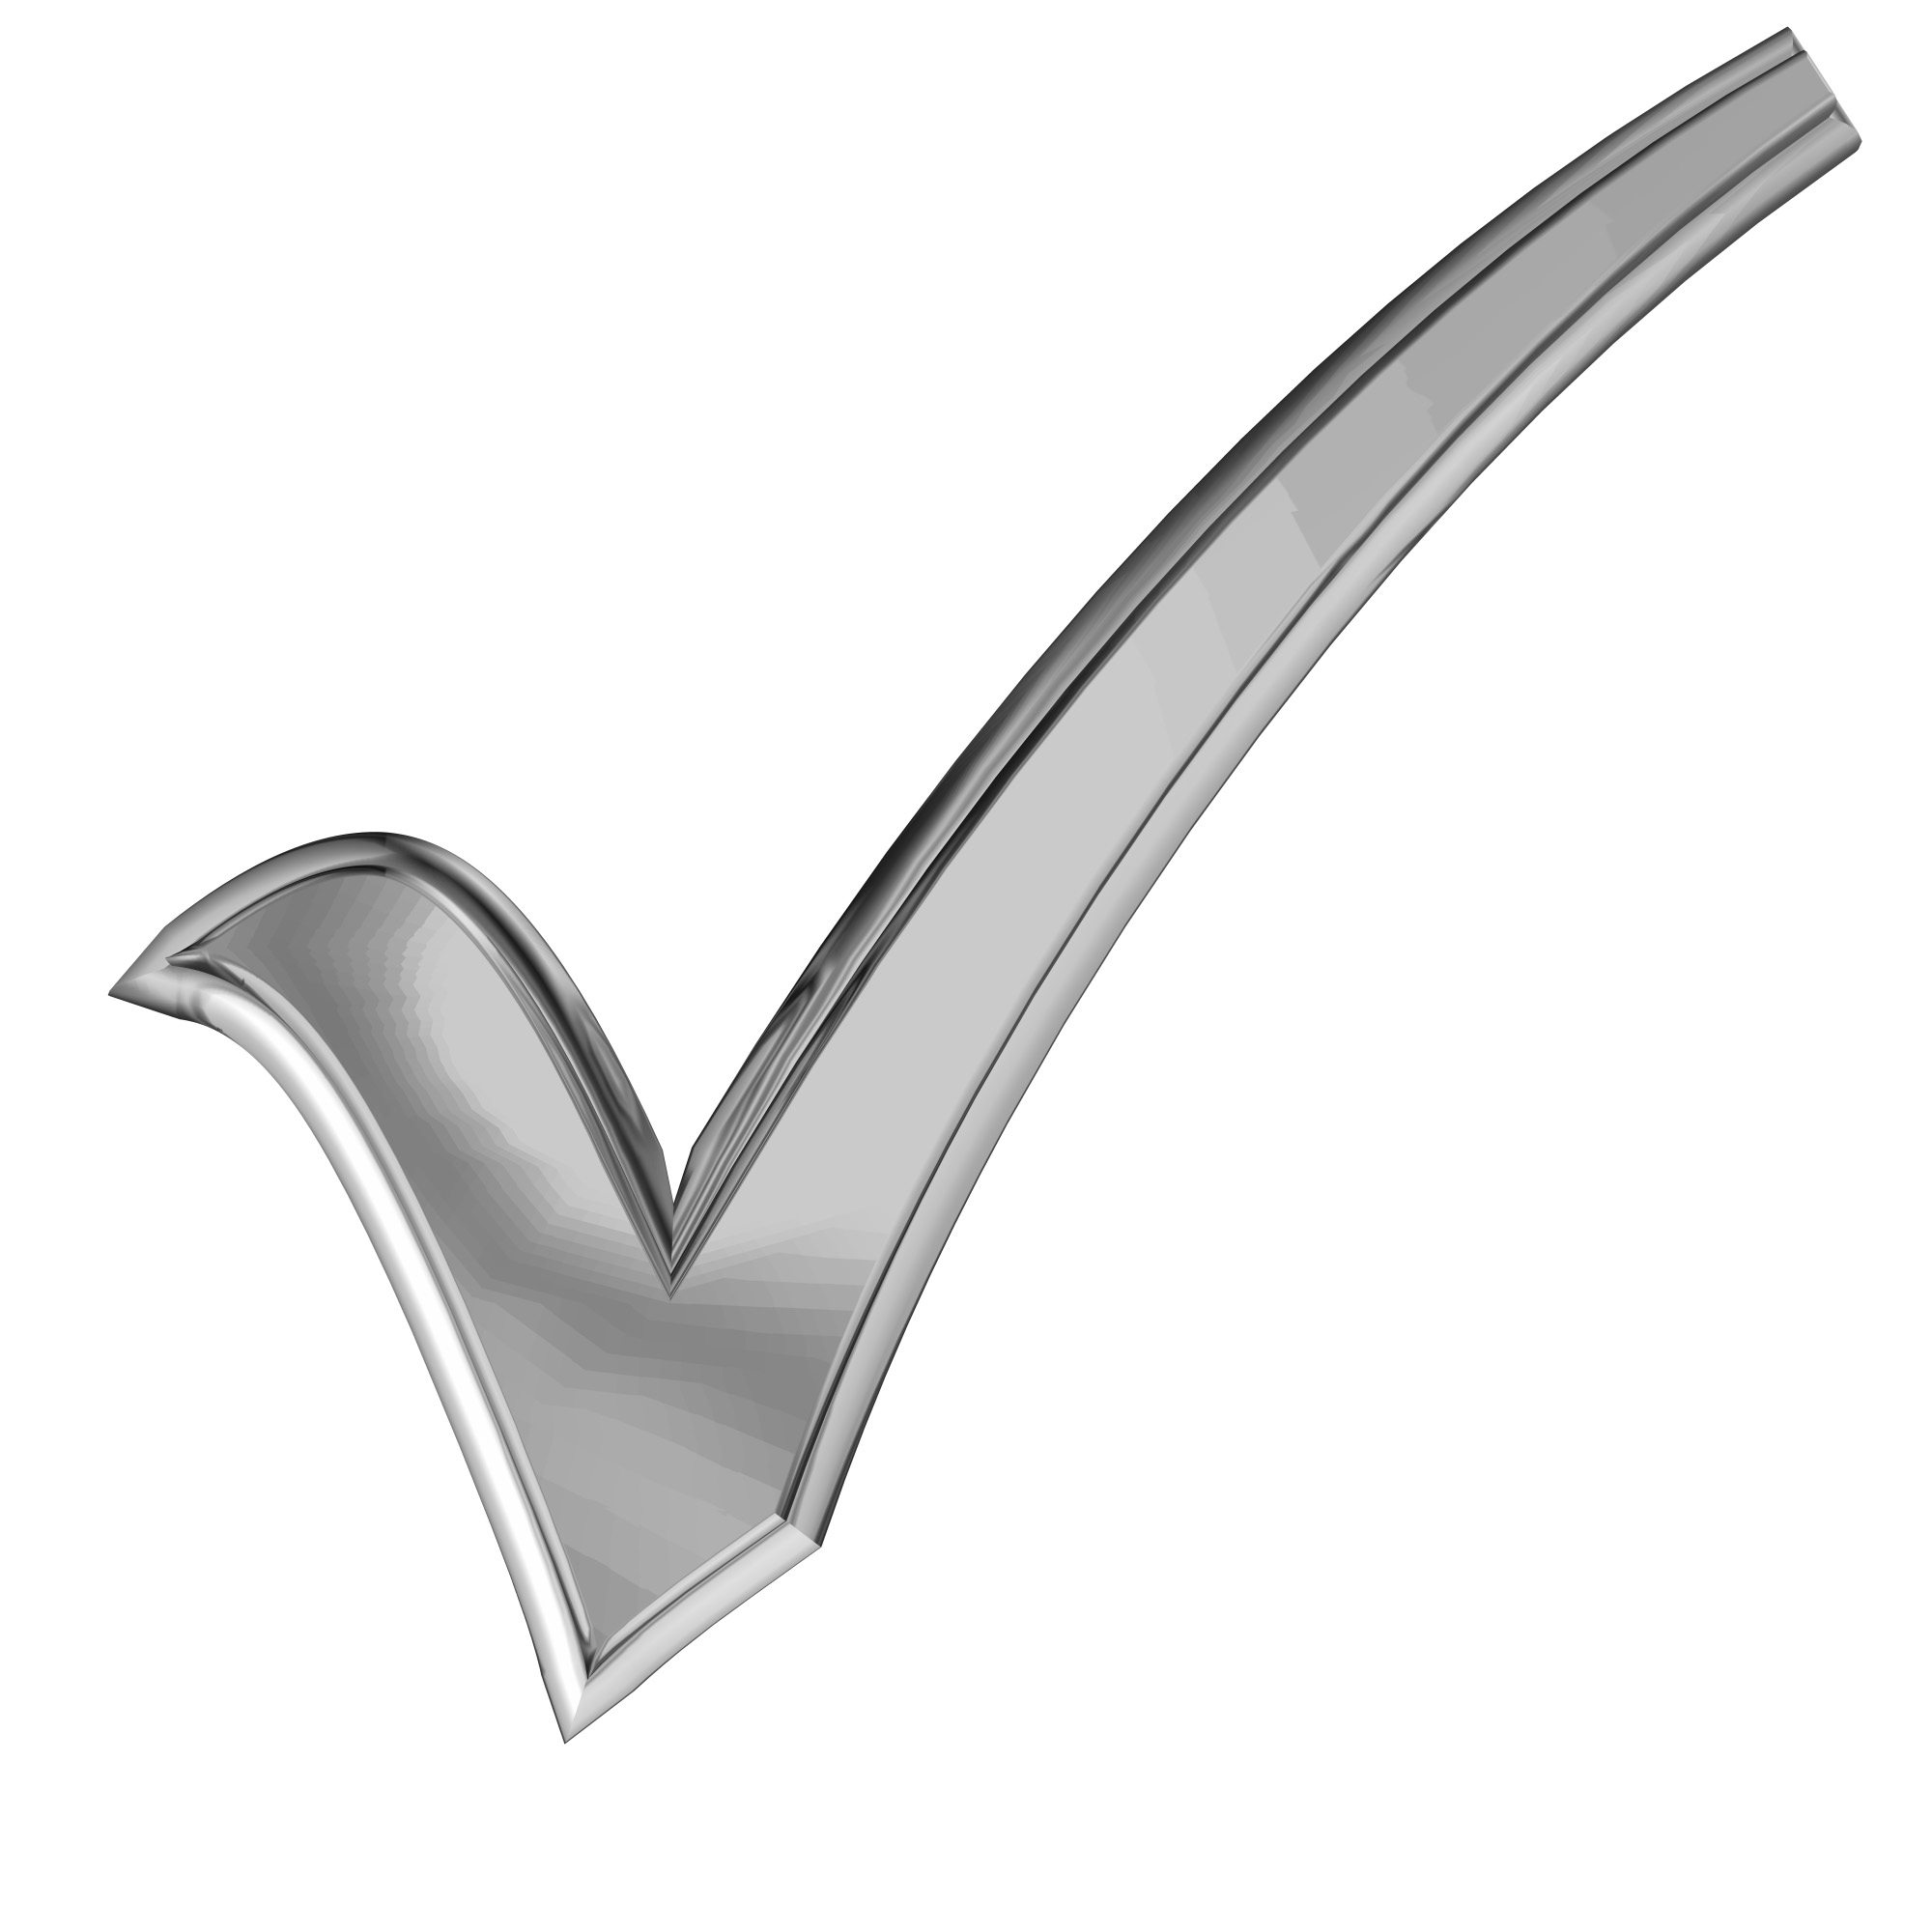 Correct Tick Symbol - ClipArt Best